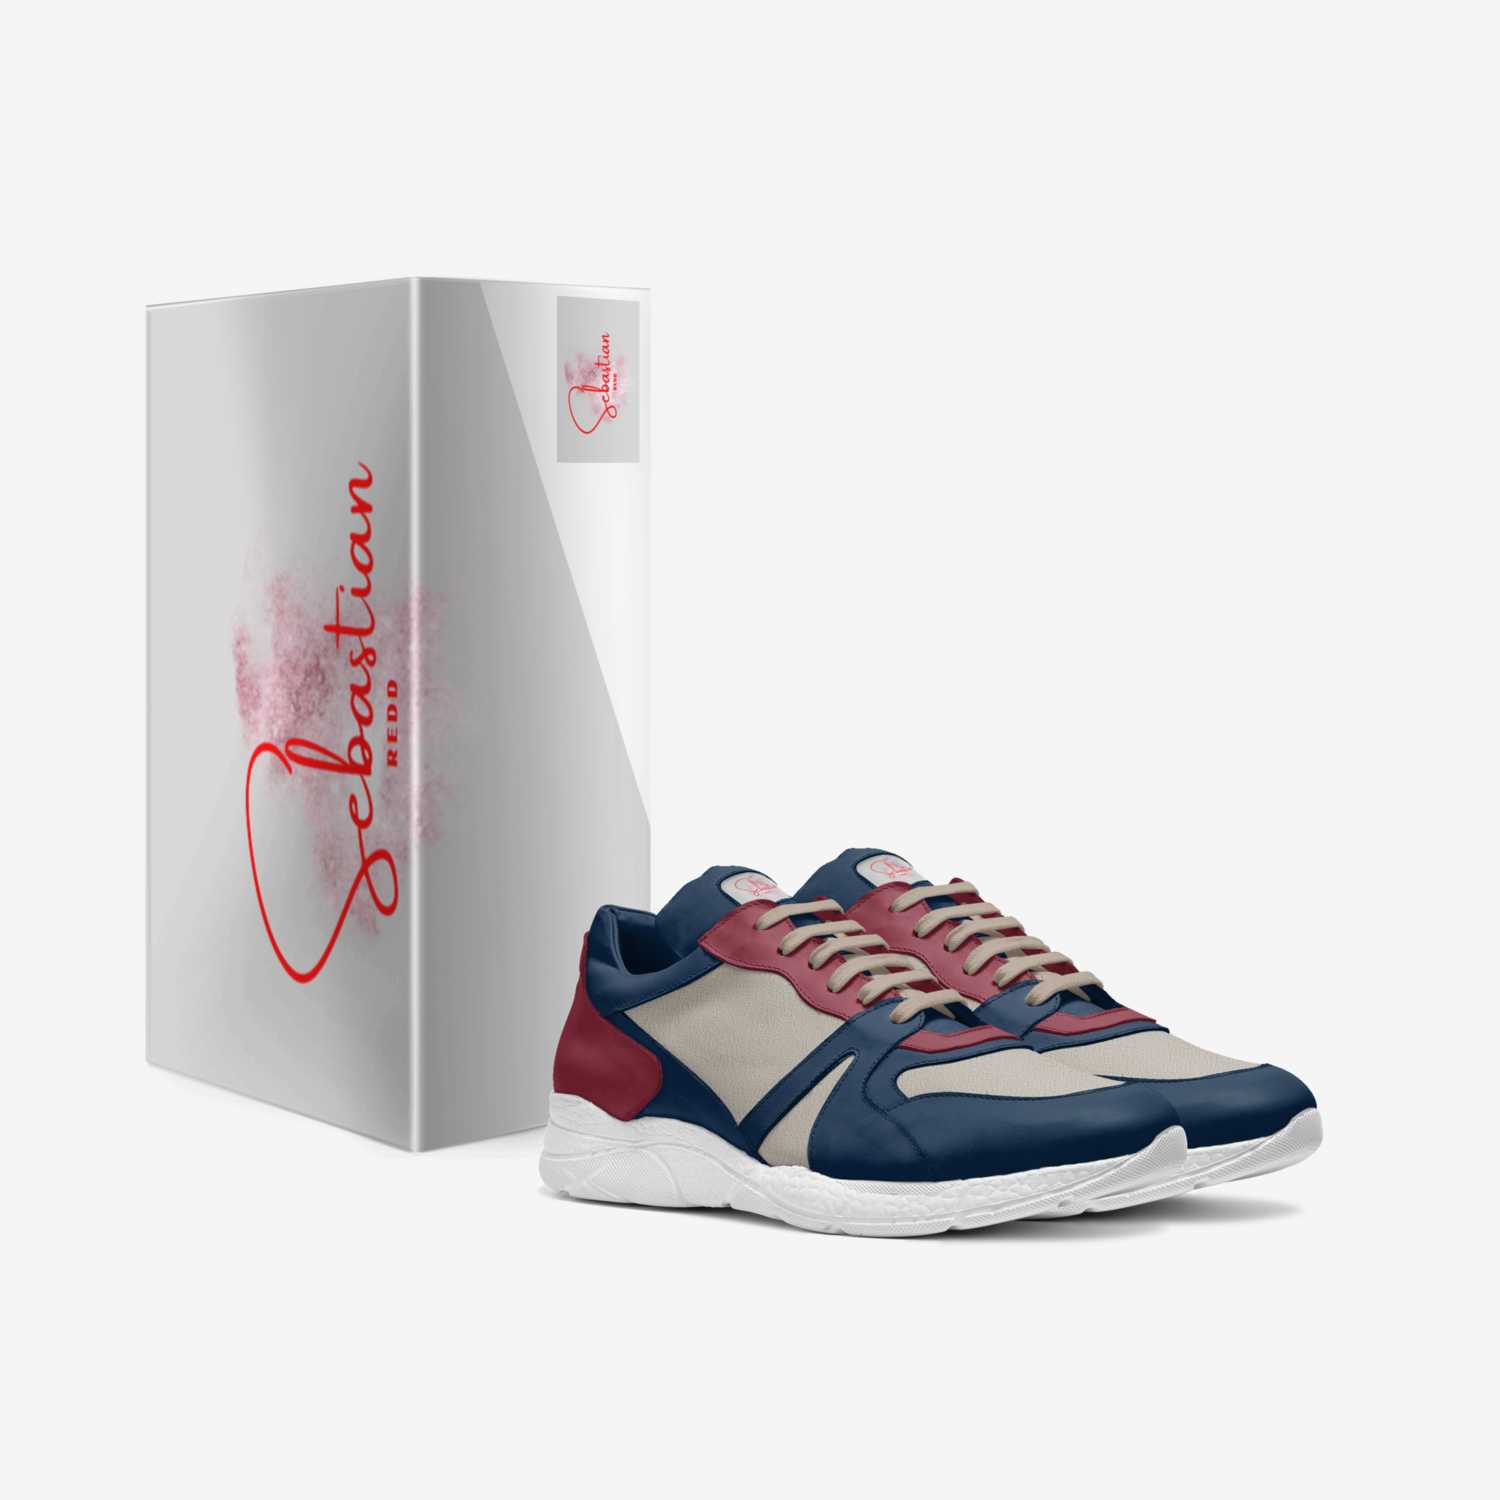 Sebastian Redd custom made in Italy shoes by Tayvon Murray | Box view